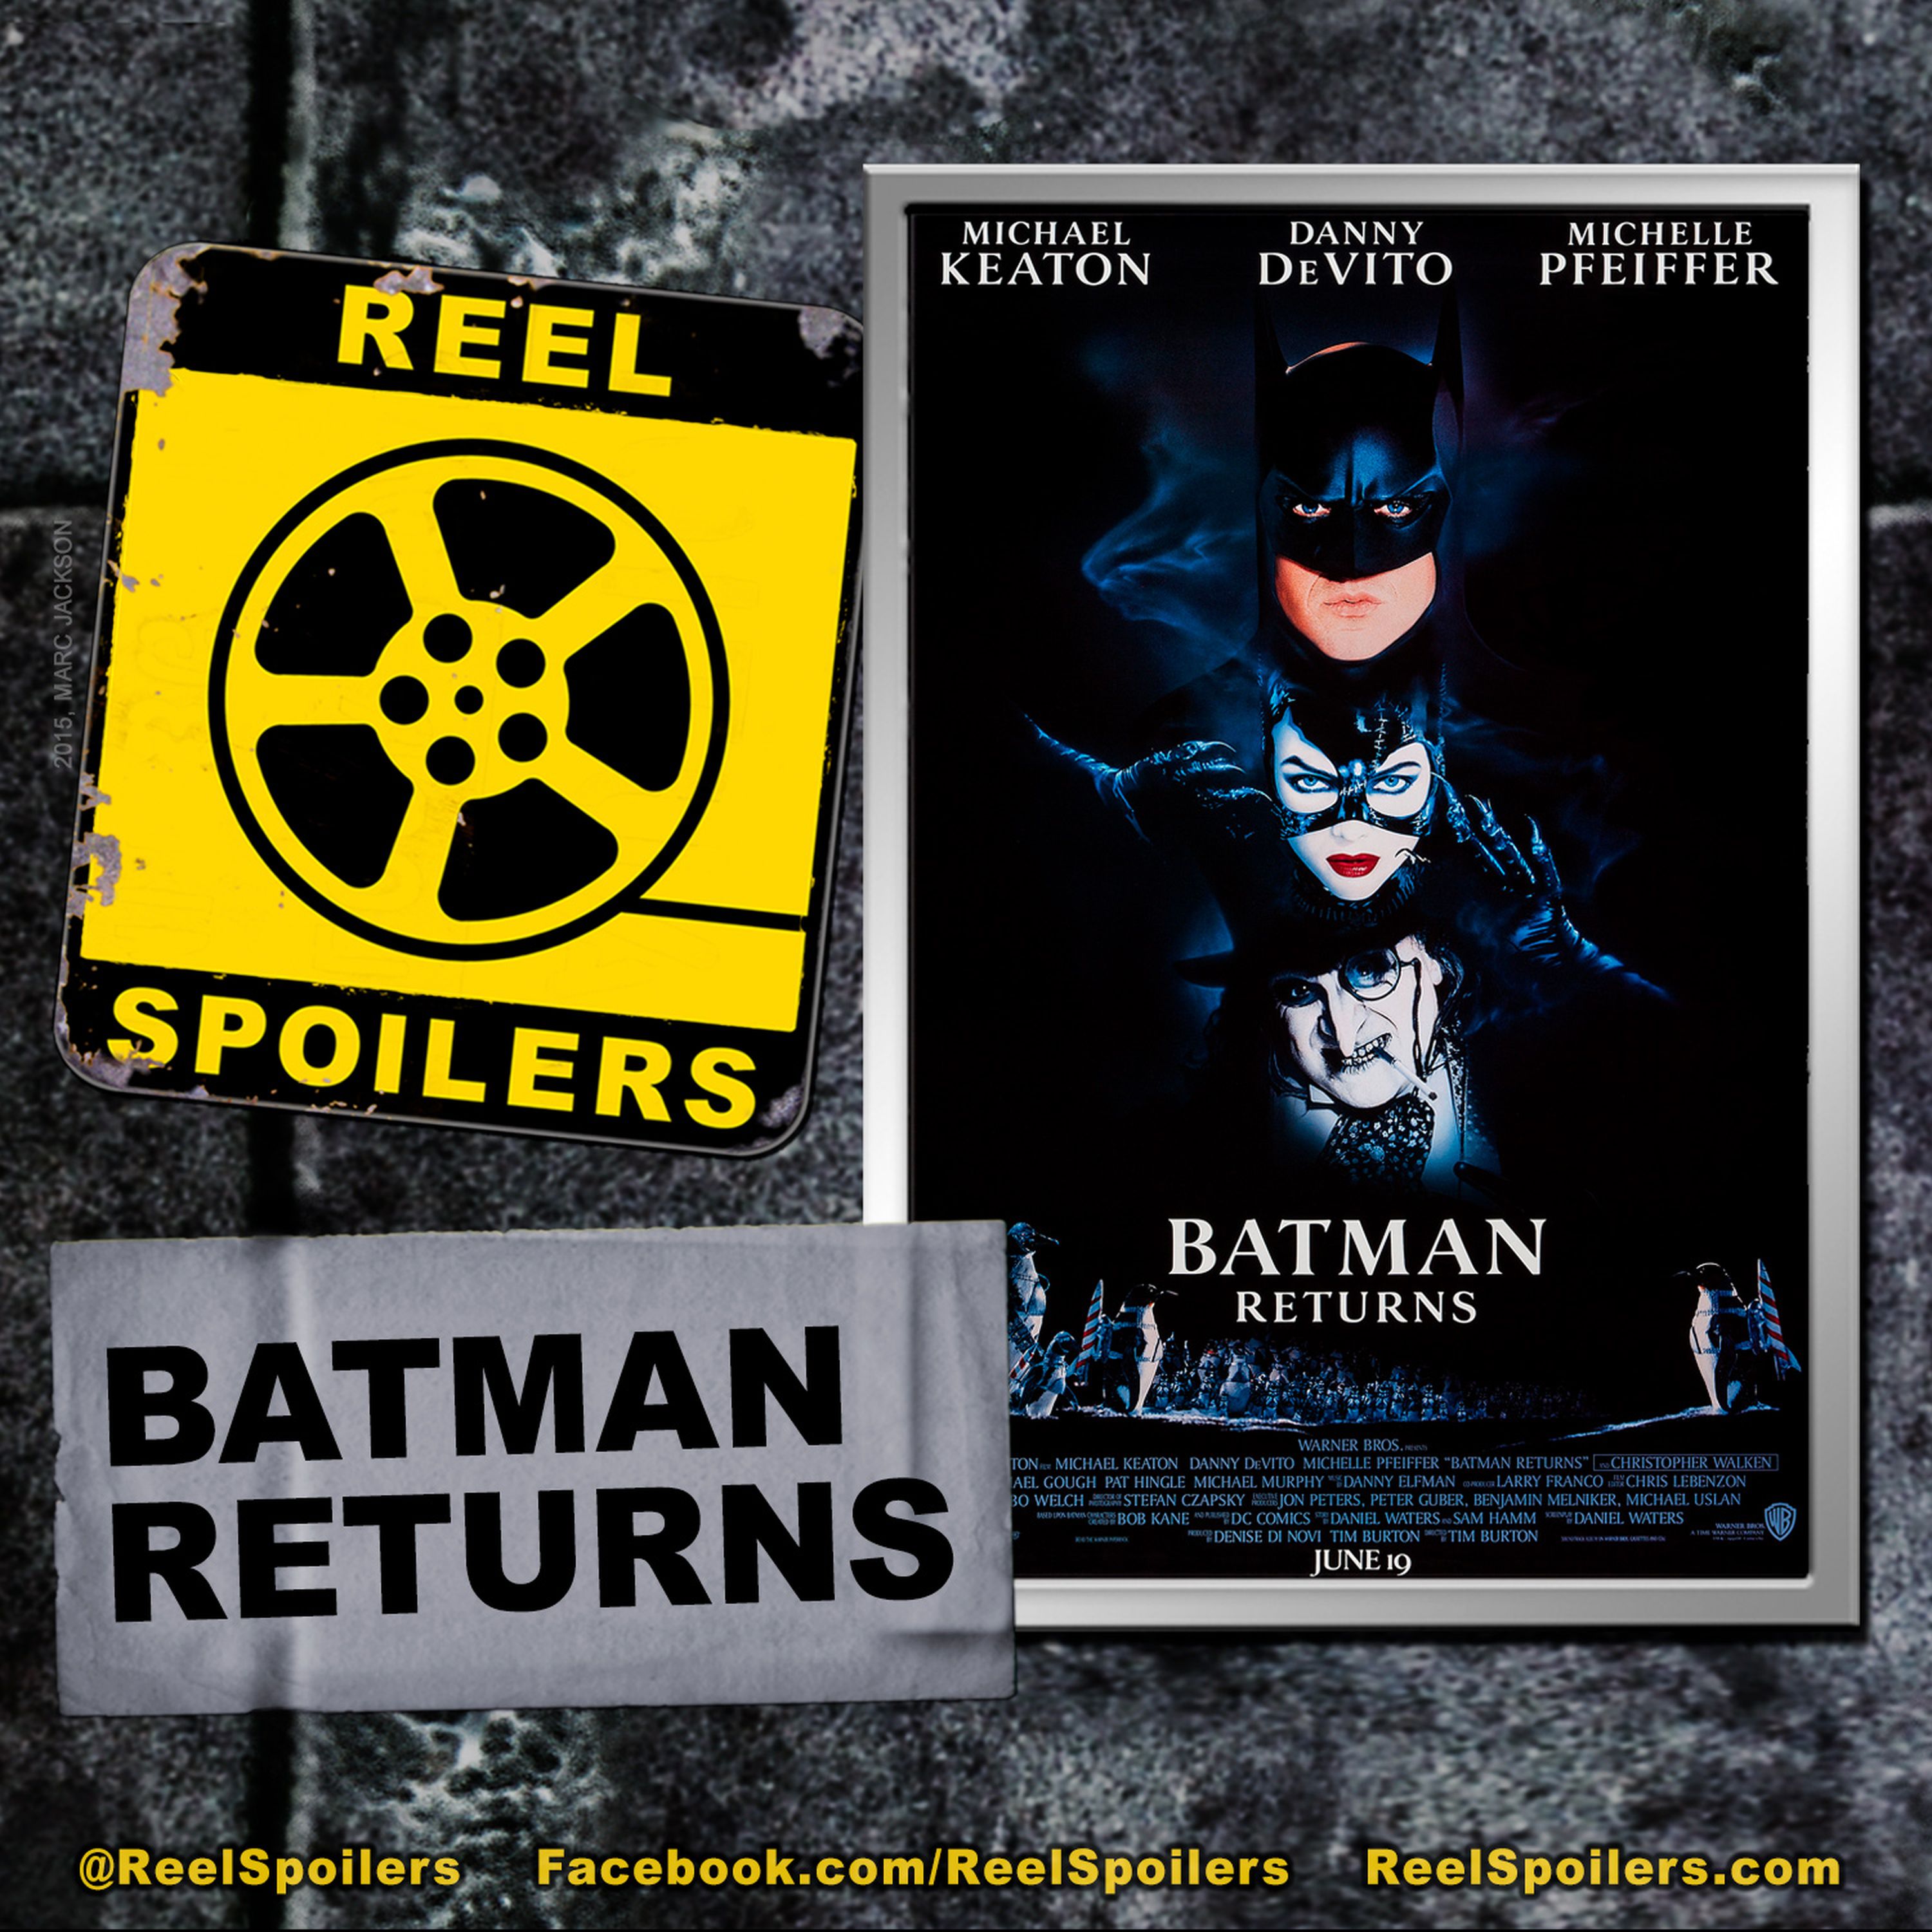 BATMAN RETURNS Starring  Michael Keaton, Danny DeVito, Michelle Pfeiffer Image